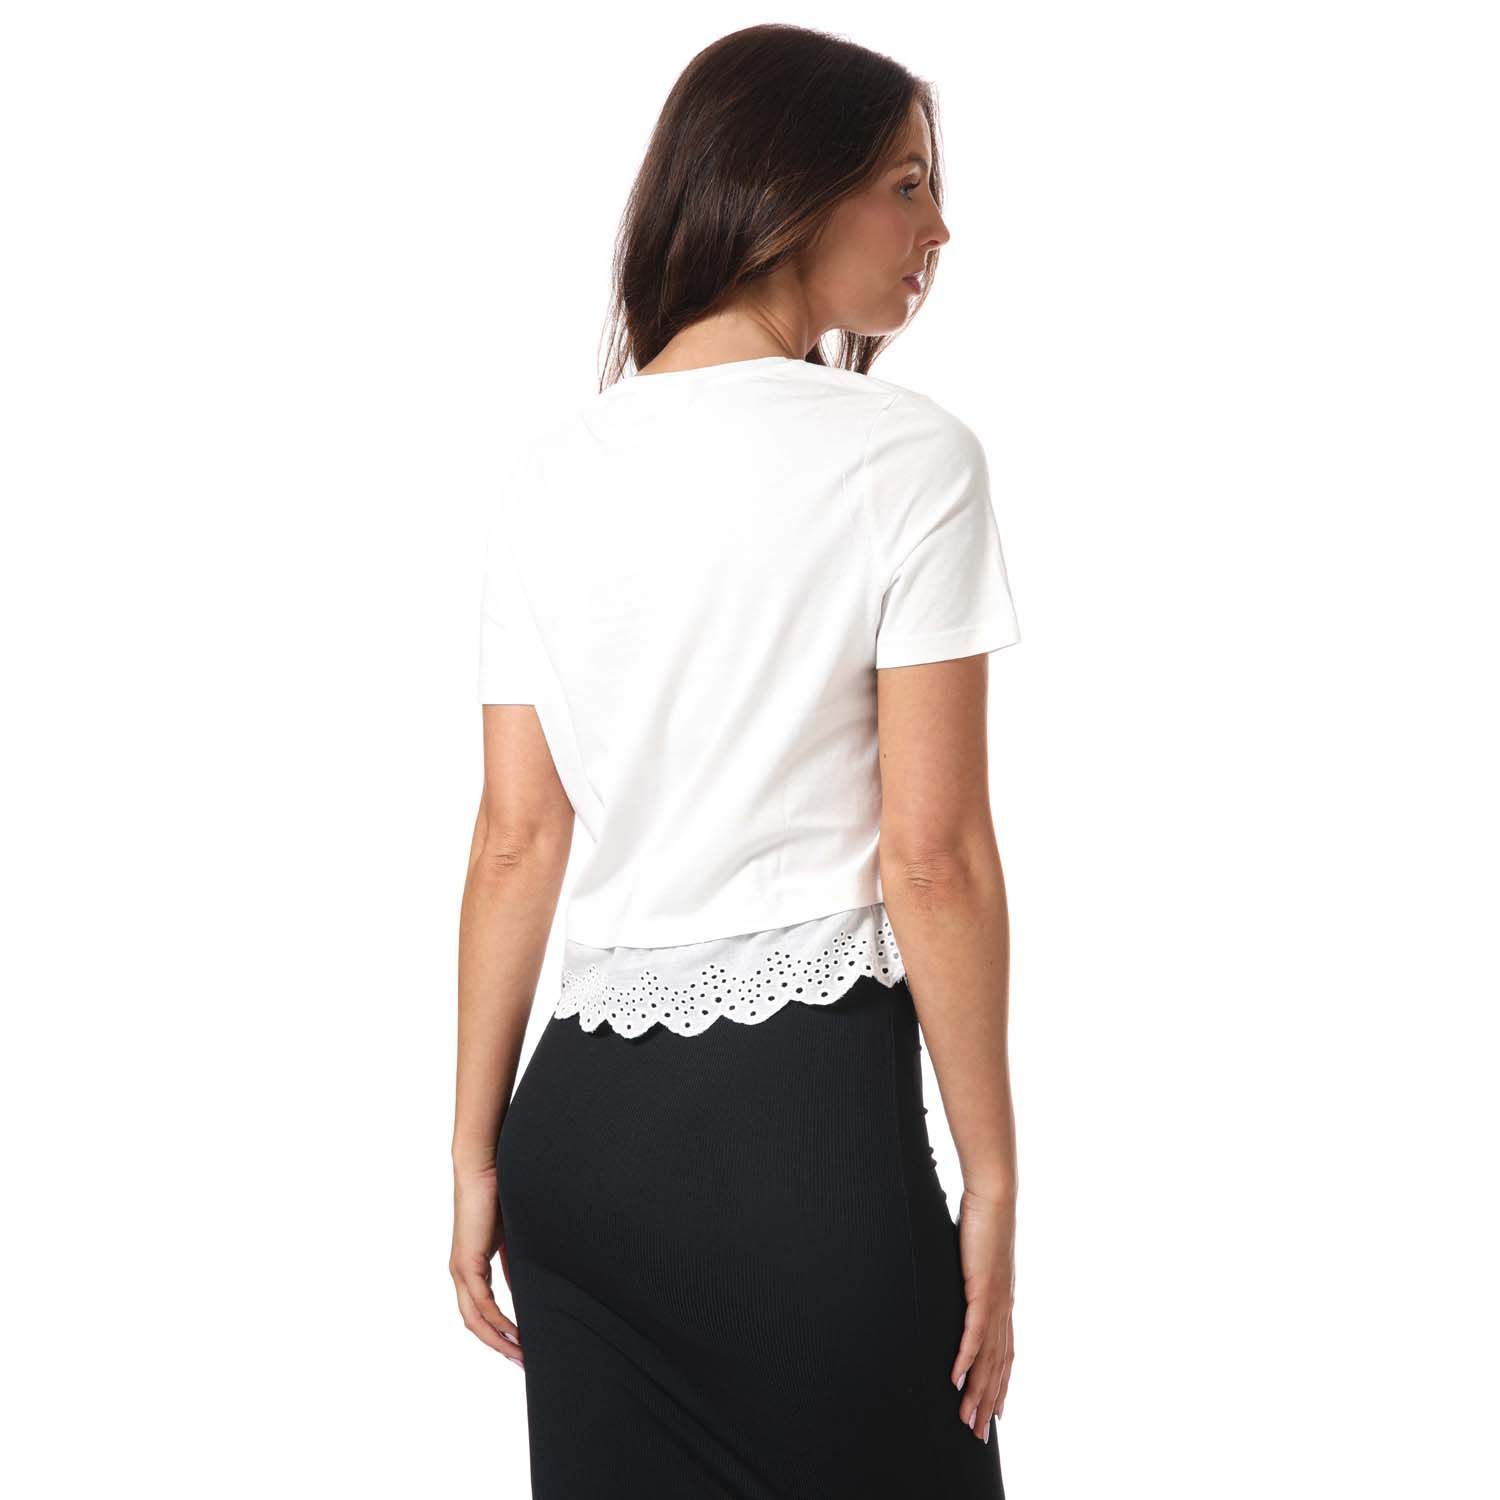 Womens Vero Moda Summer Short Sleeve Jersey Top in white.- Round neckline.- Shorts sleeves.- Embroidery details at the bottom hem.- Detailed t-shirt.- Regular fit.- 100% Cotton.- Ref: 10266898